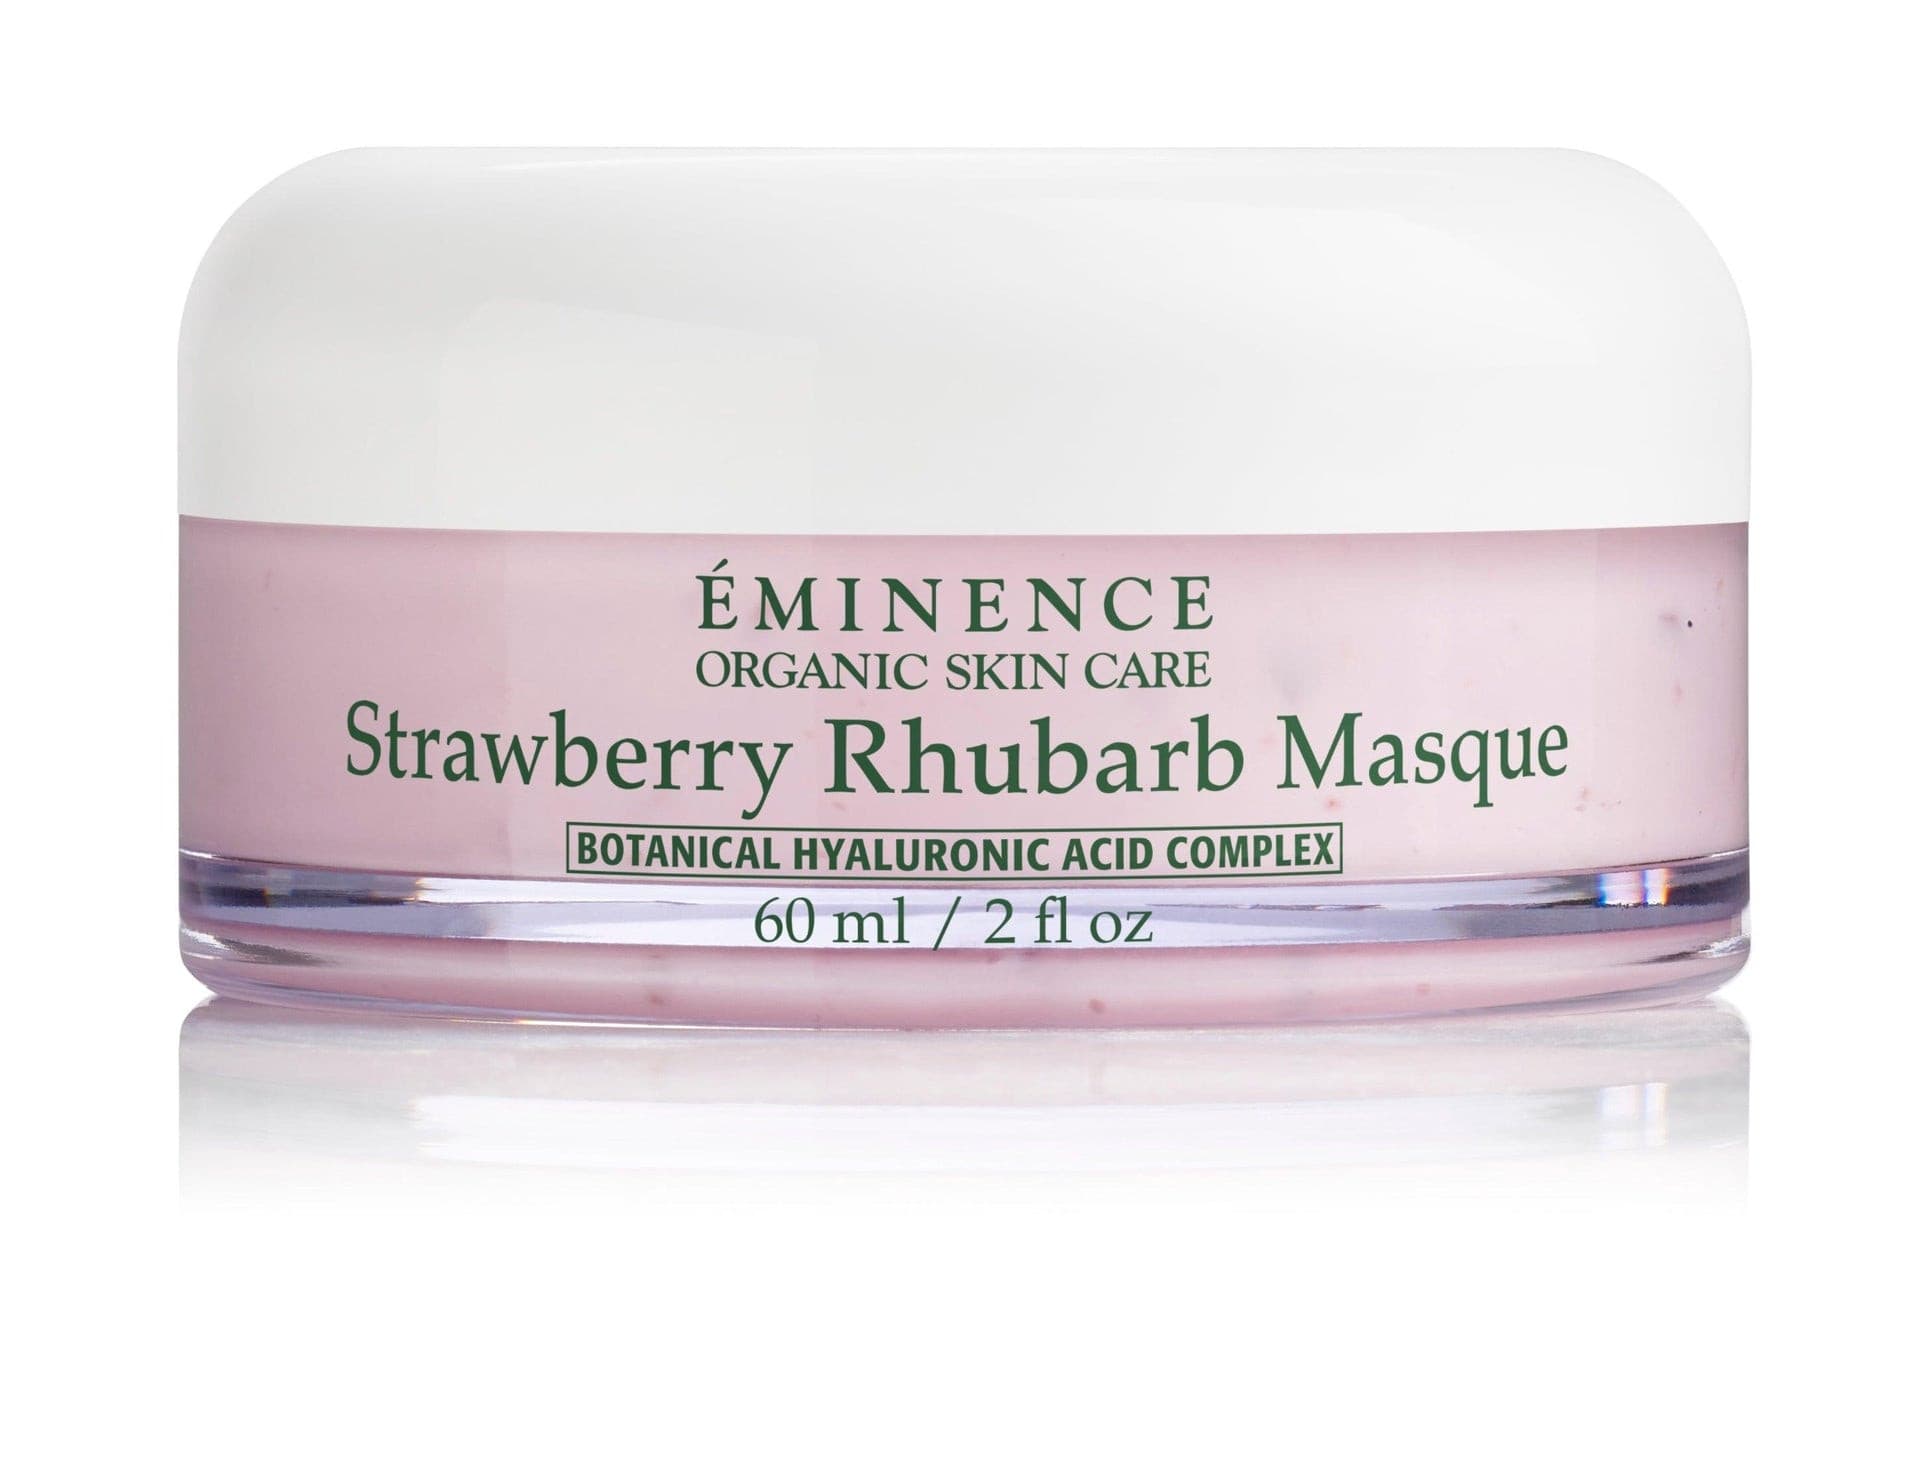 Strawberry Rhubarb Masque.